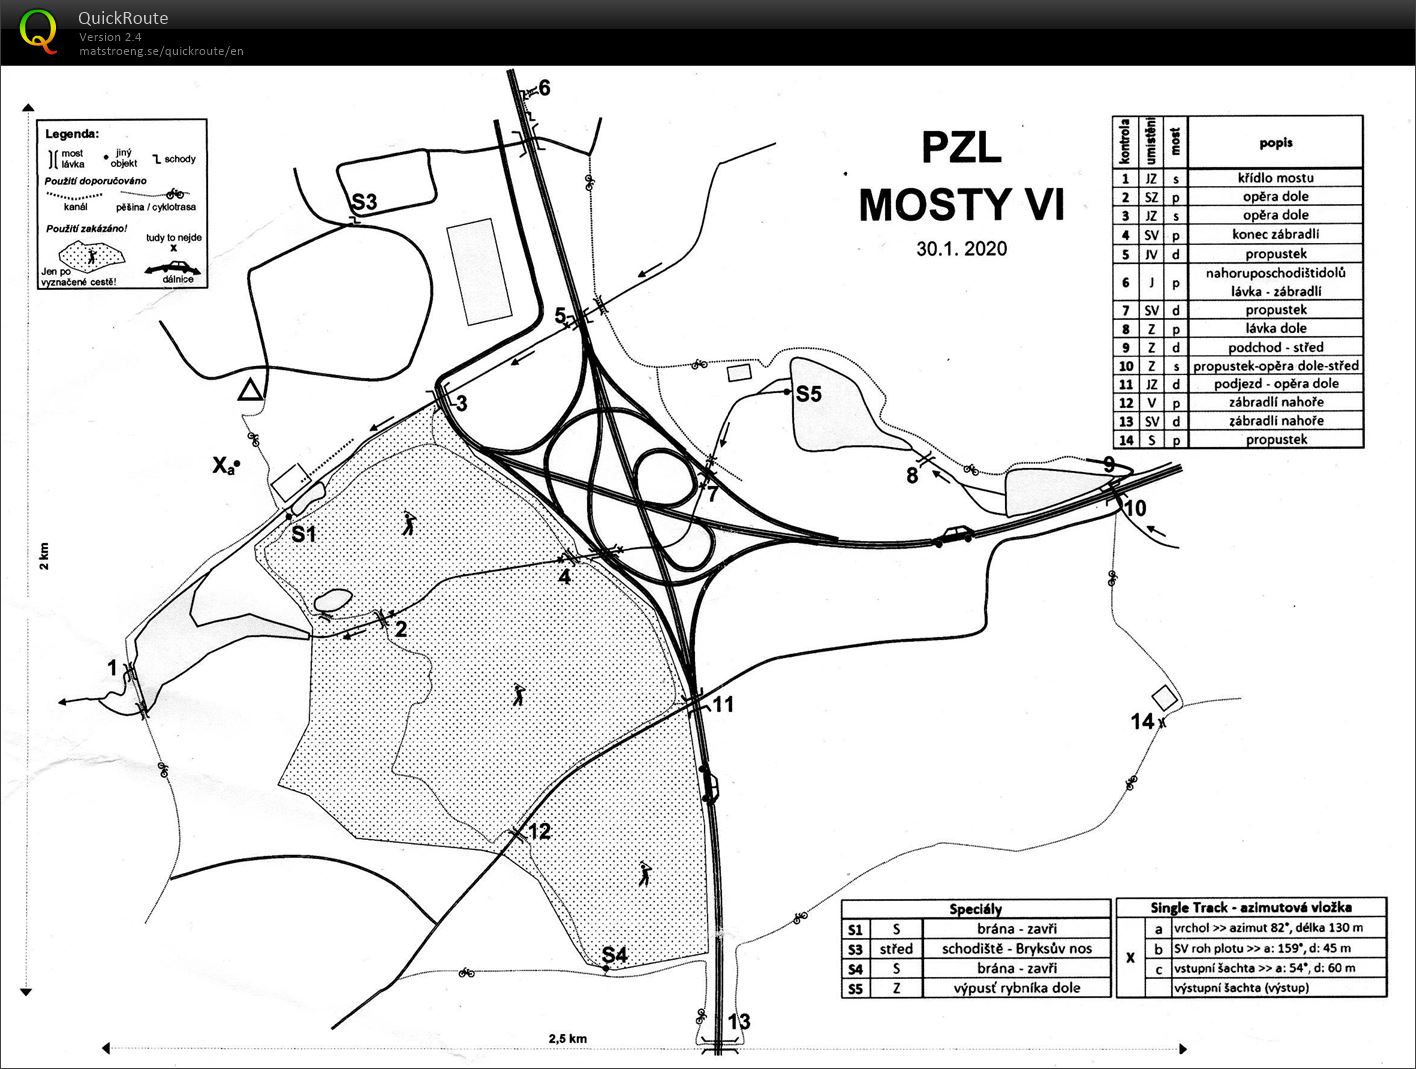 PZL - Mosty VI (30/01/2020)